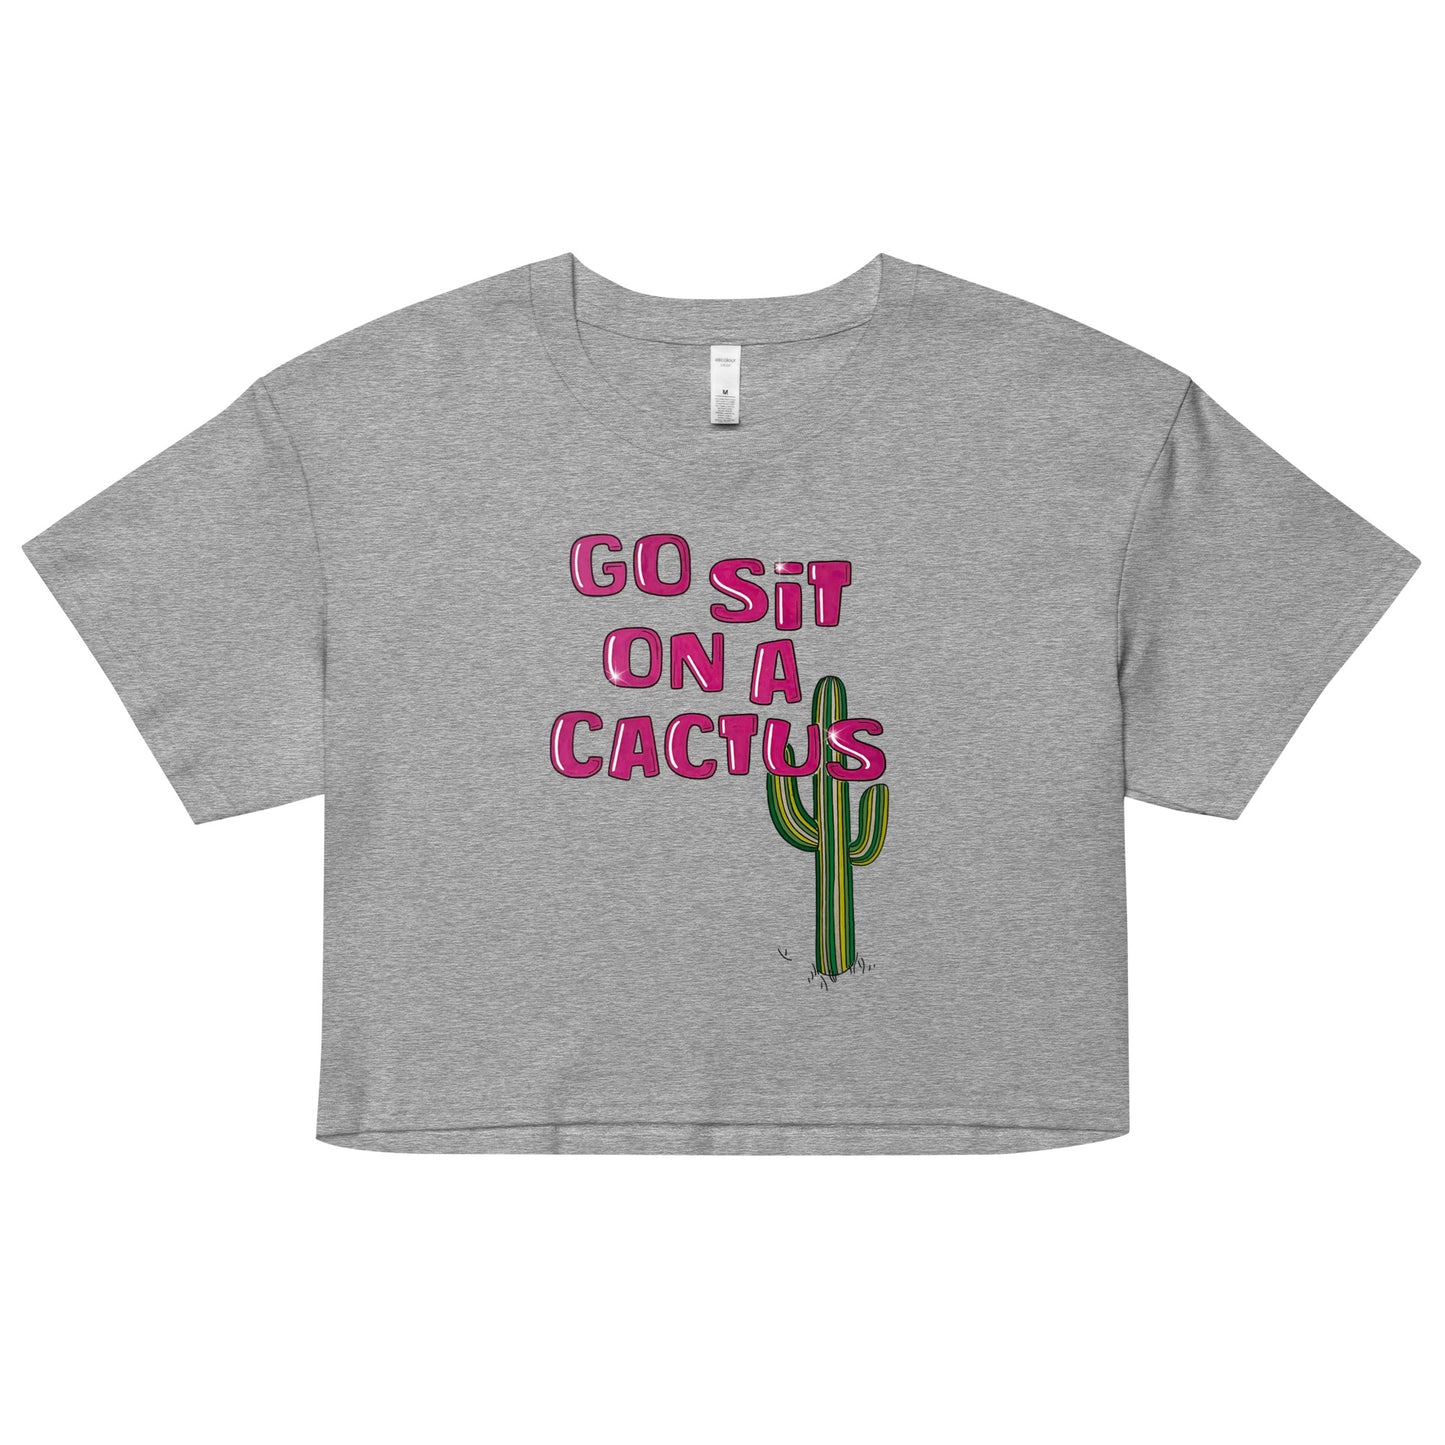 Go Sit On a Cactus crop top